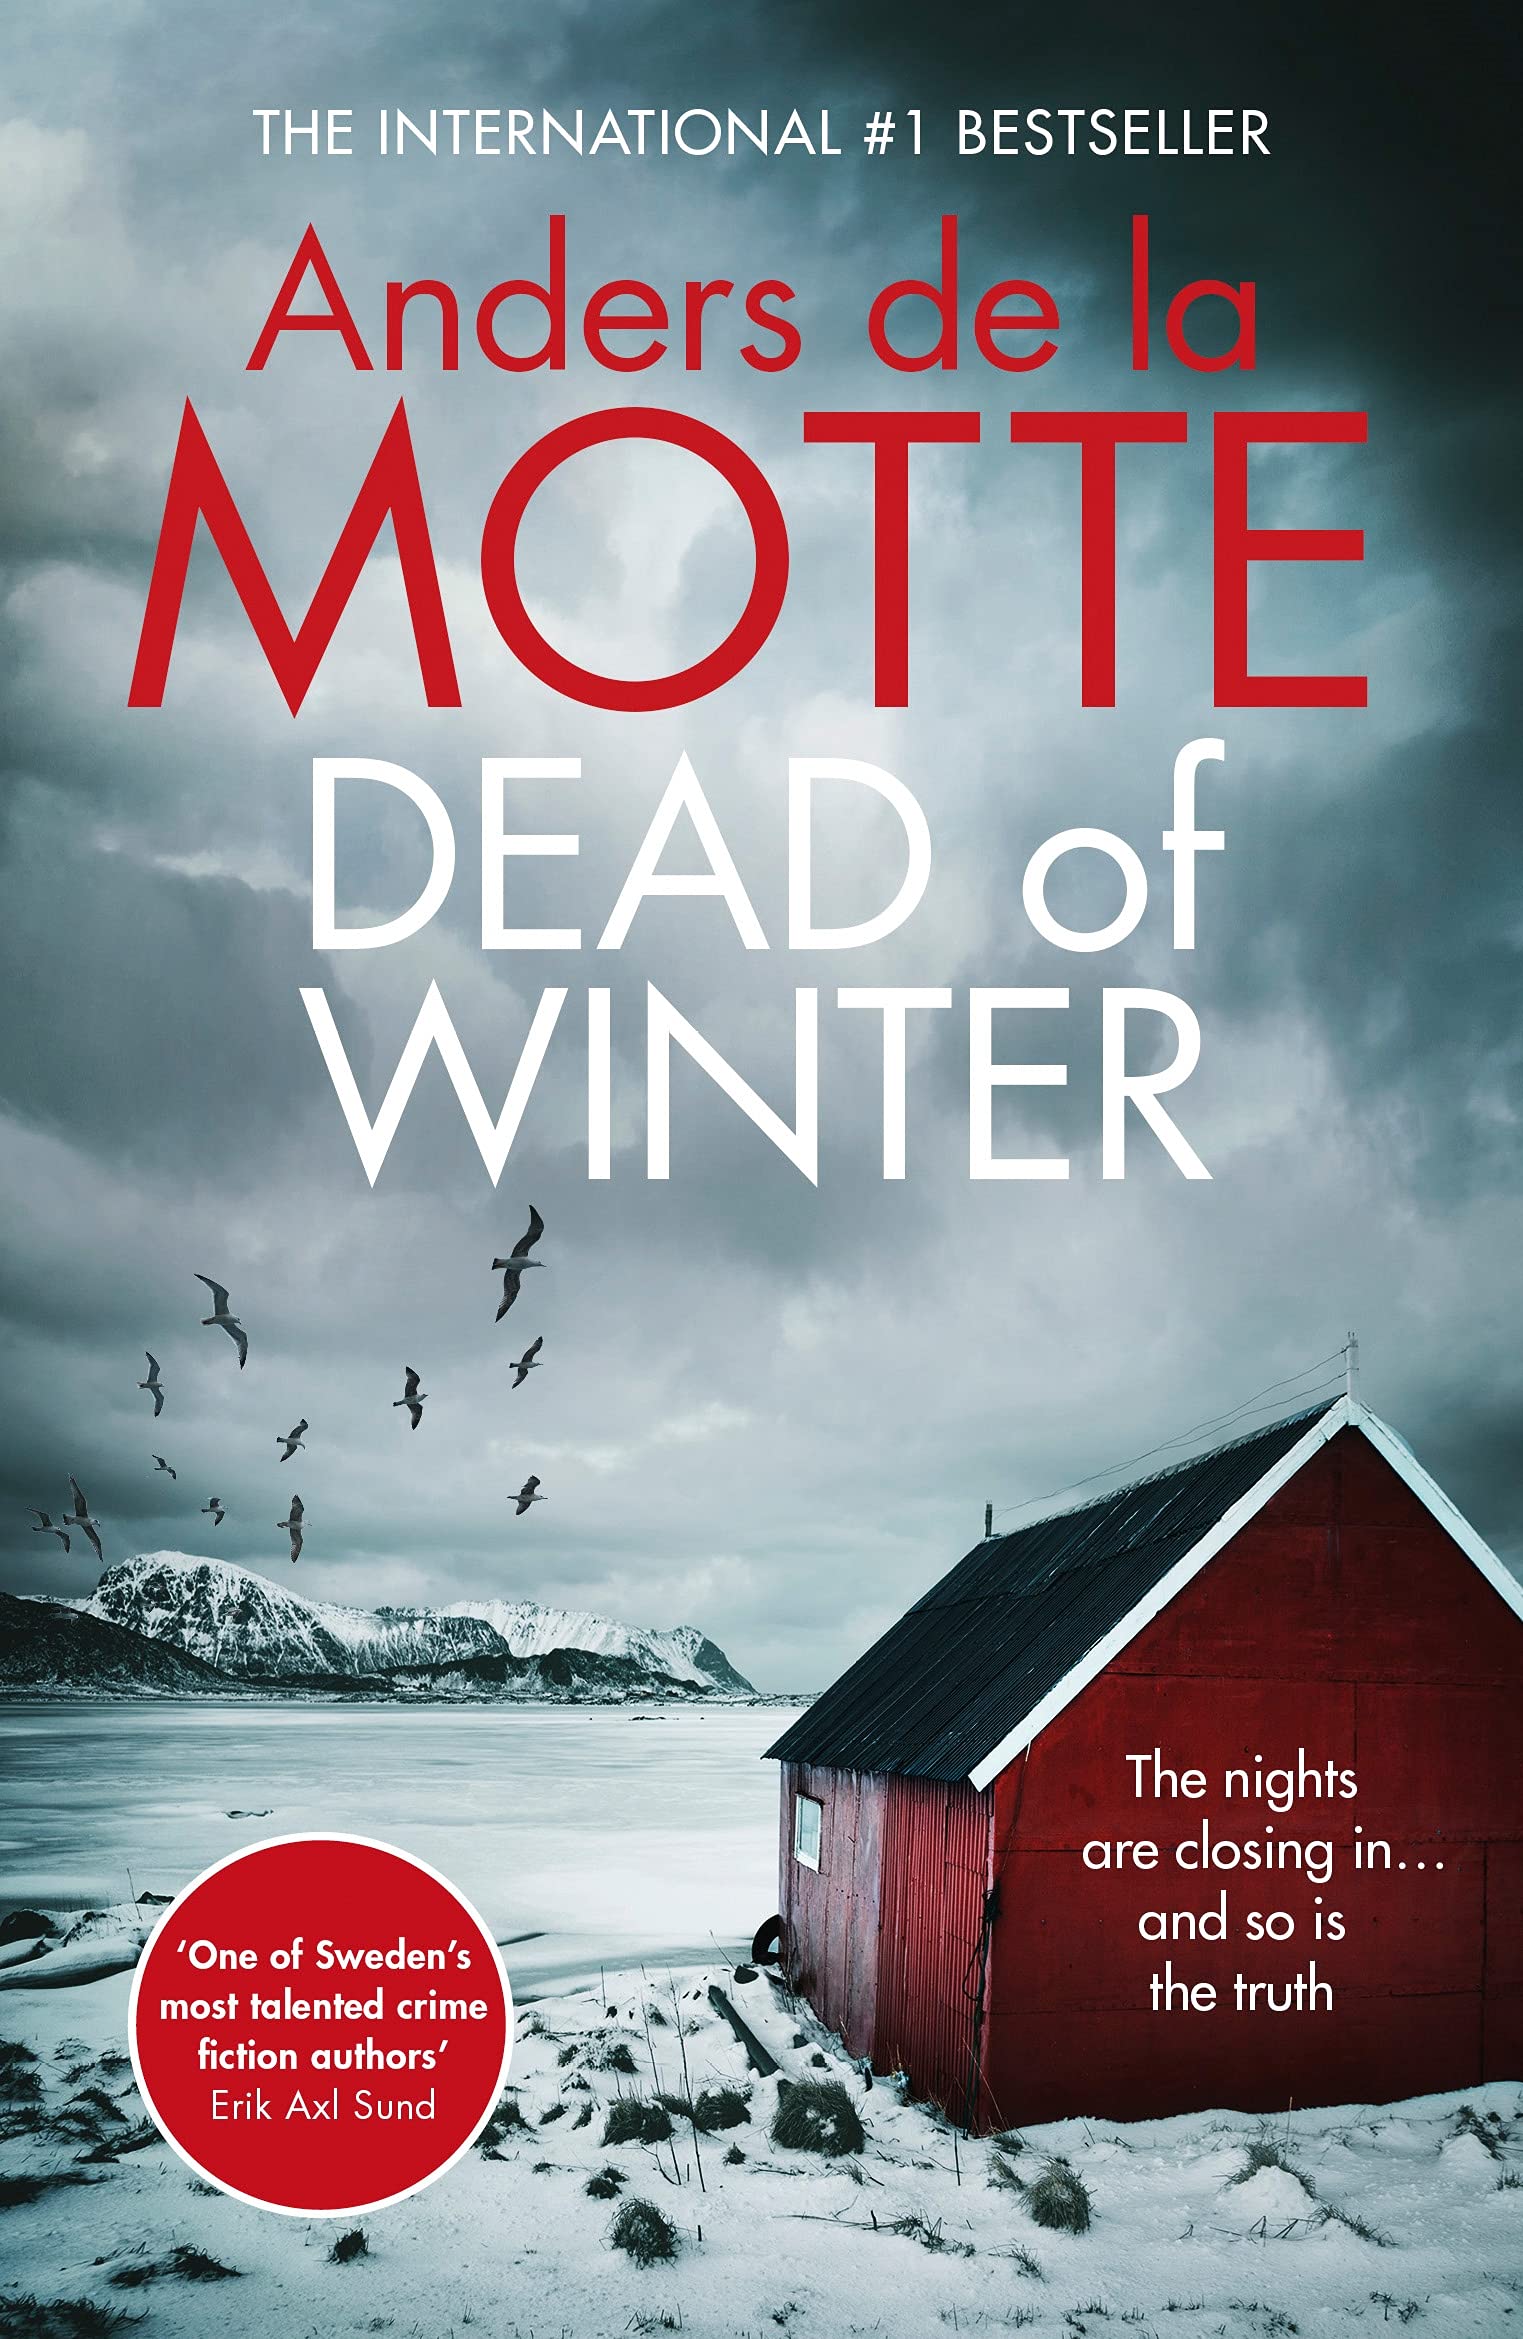 Dead of Winter - Anders de la Motte